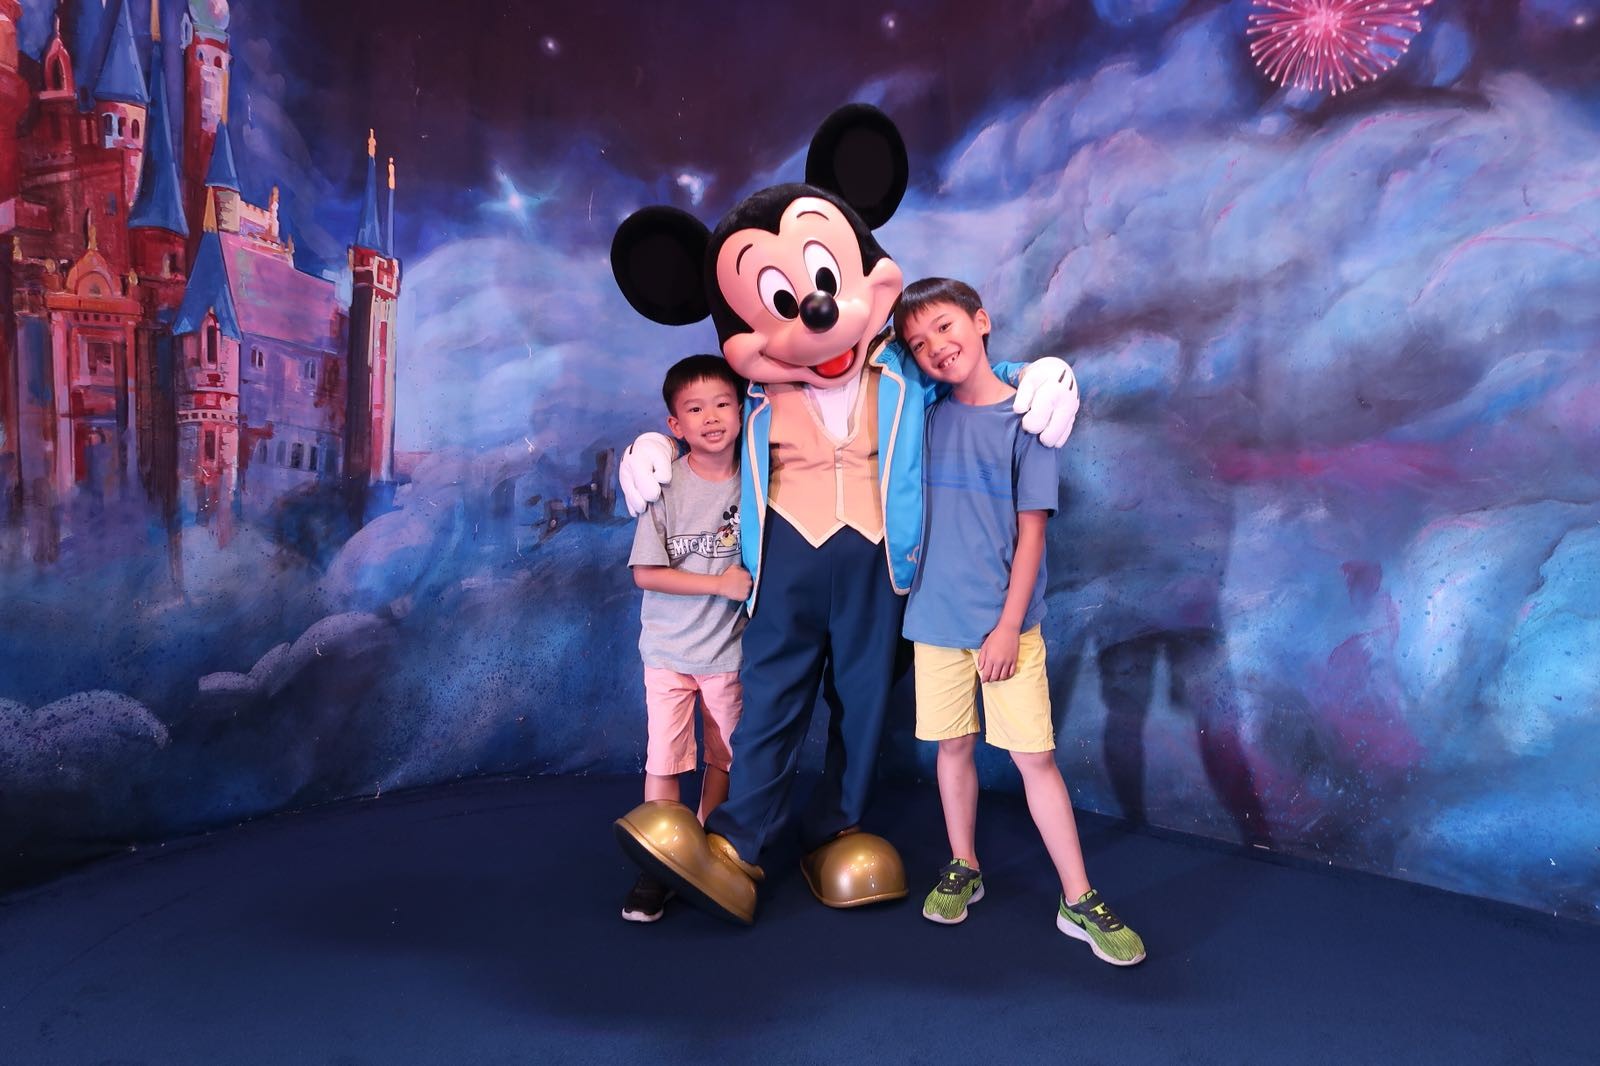 The trip to Shanghai Disneyland was another chance for the children to practise Mandarin. Photo: Anita Shum